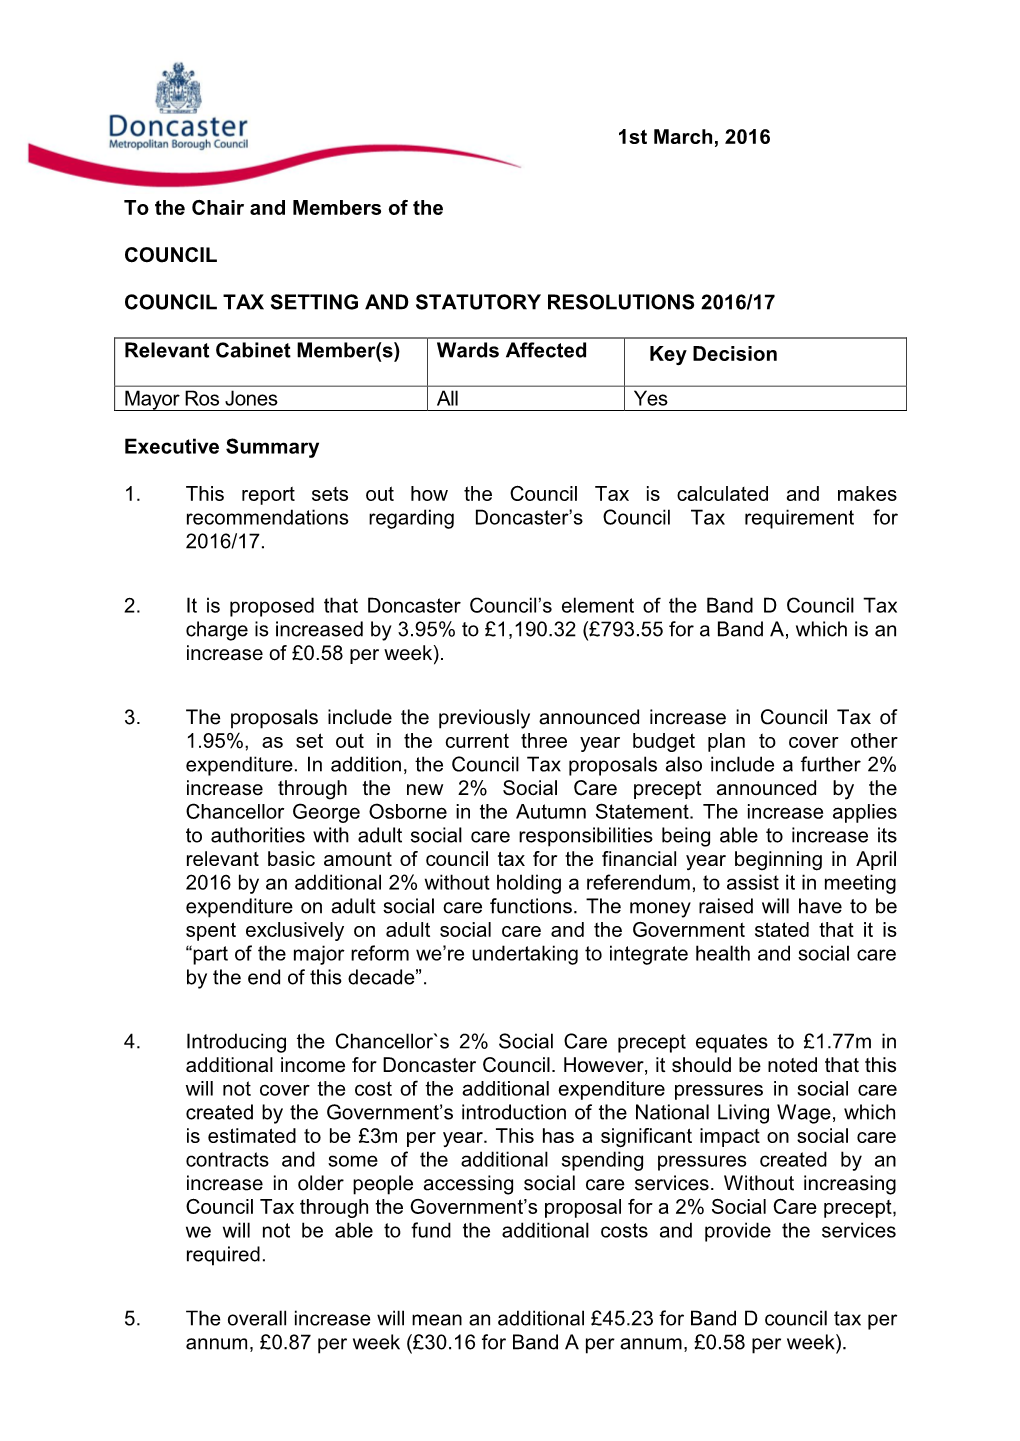 Council Tax Setting and Statutory Resolutions 2016/17. PDF 514 KB